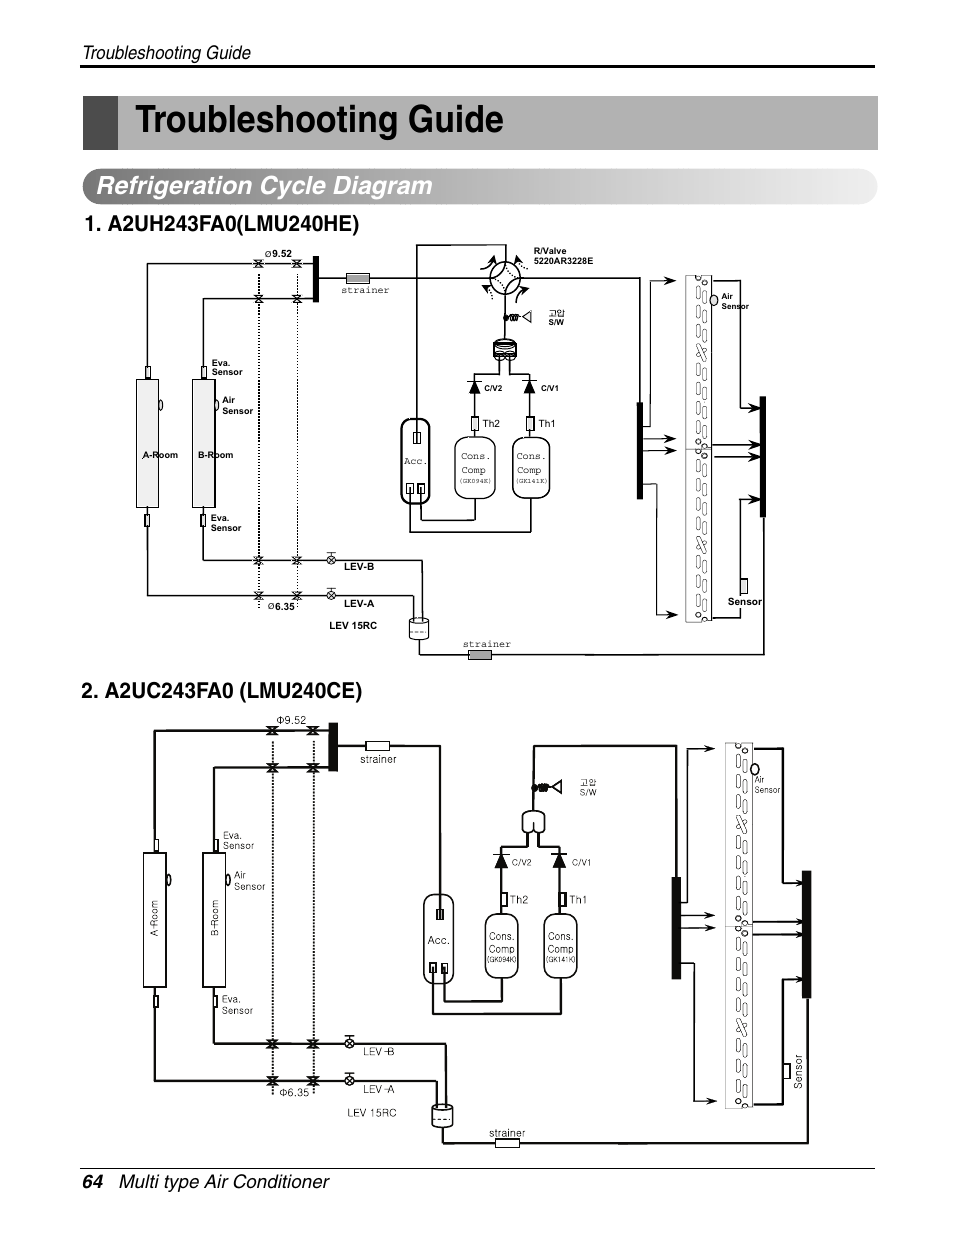 Refrigeration Cycle Diagram  64 Multi Type Air Conditioner